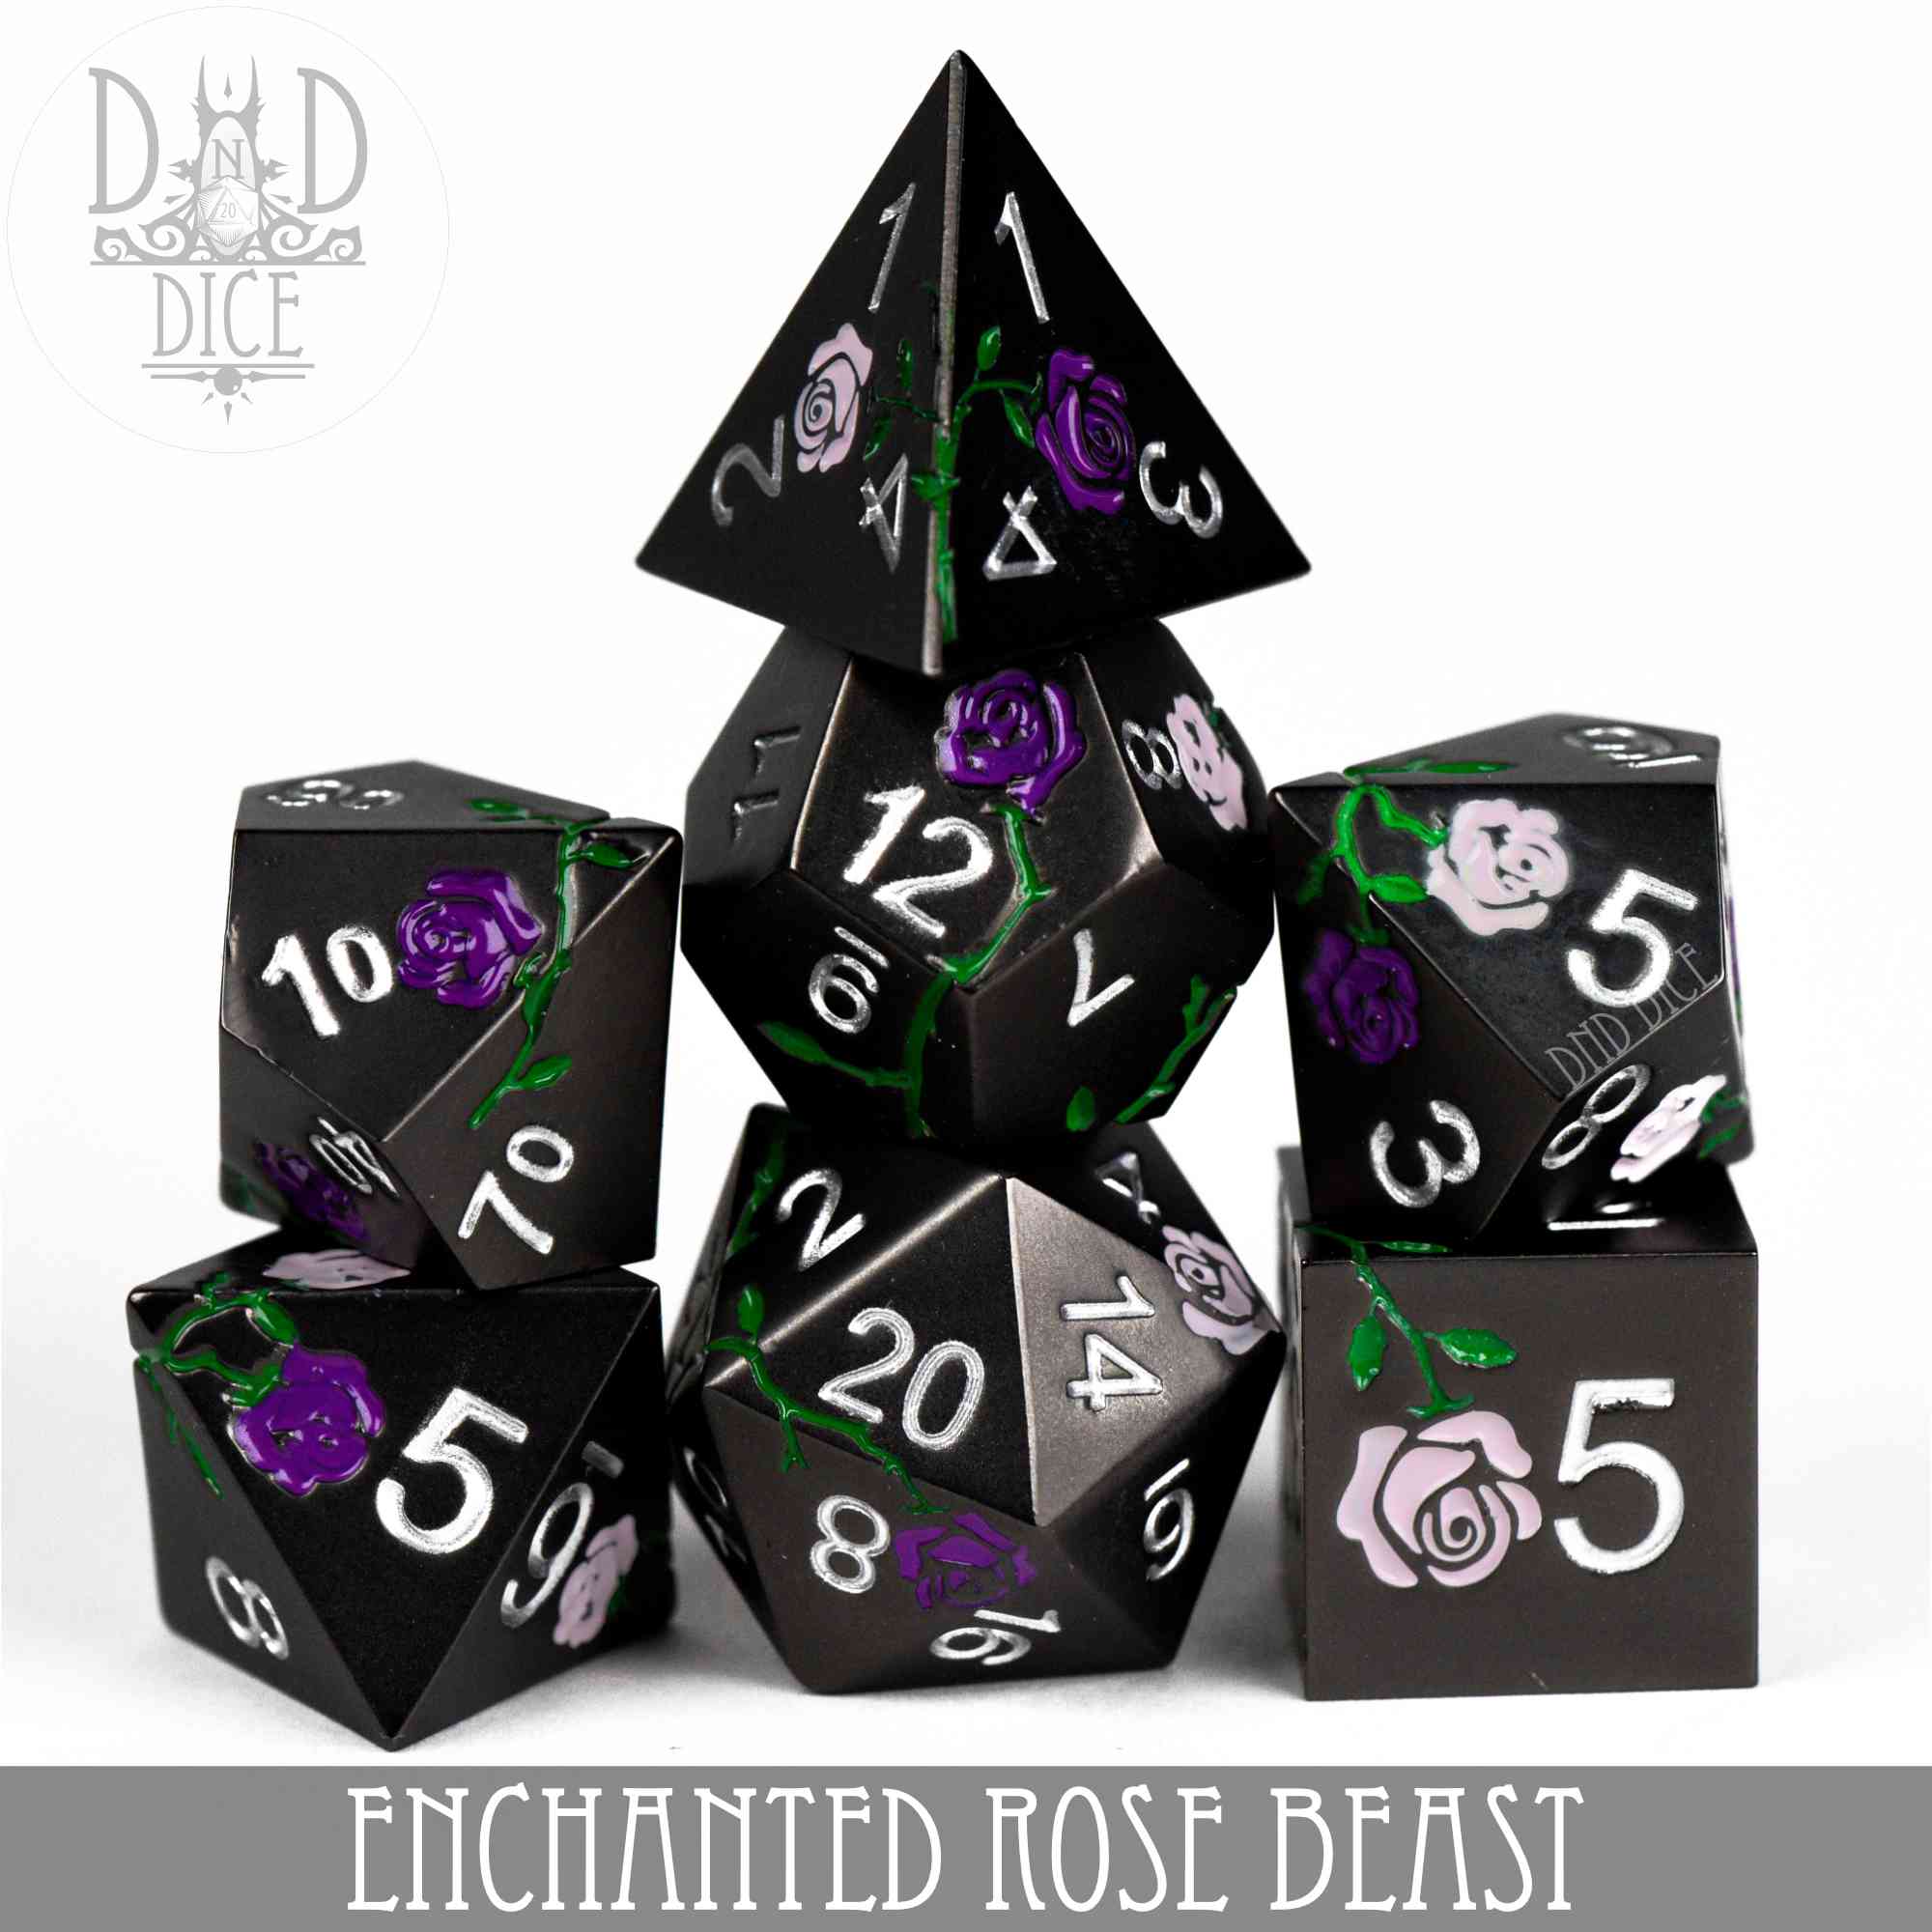 Enchanted Rose: Beast - Metal Dice Set